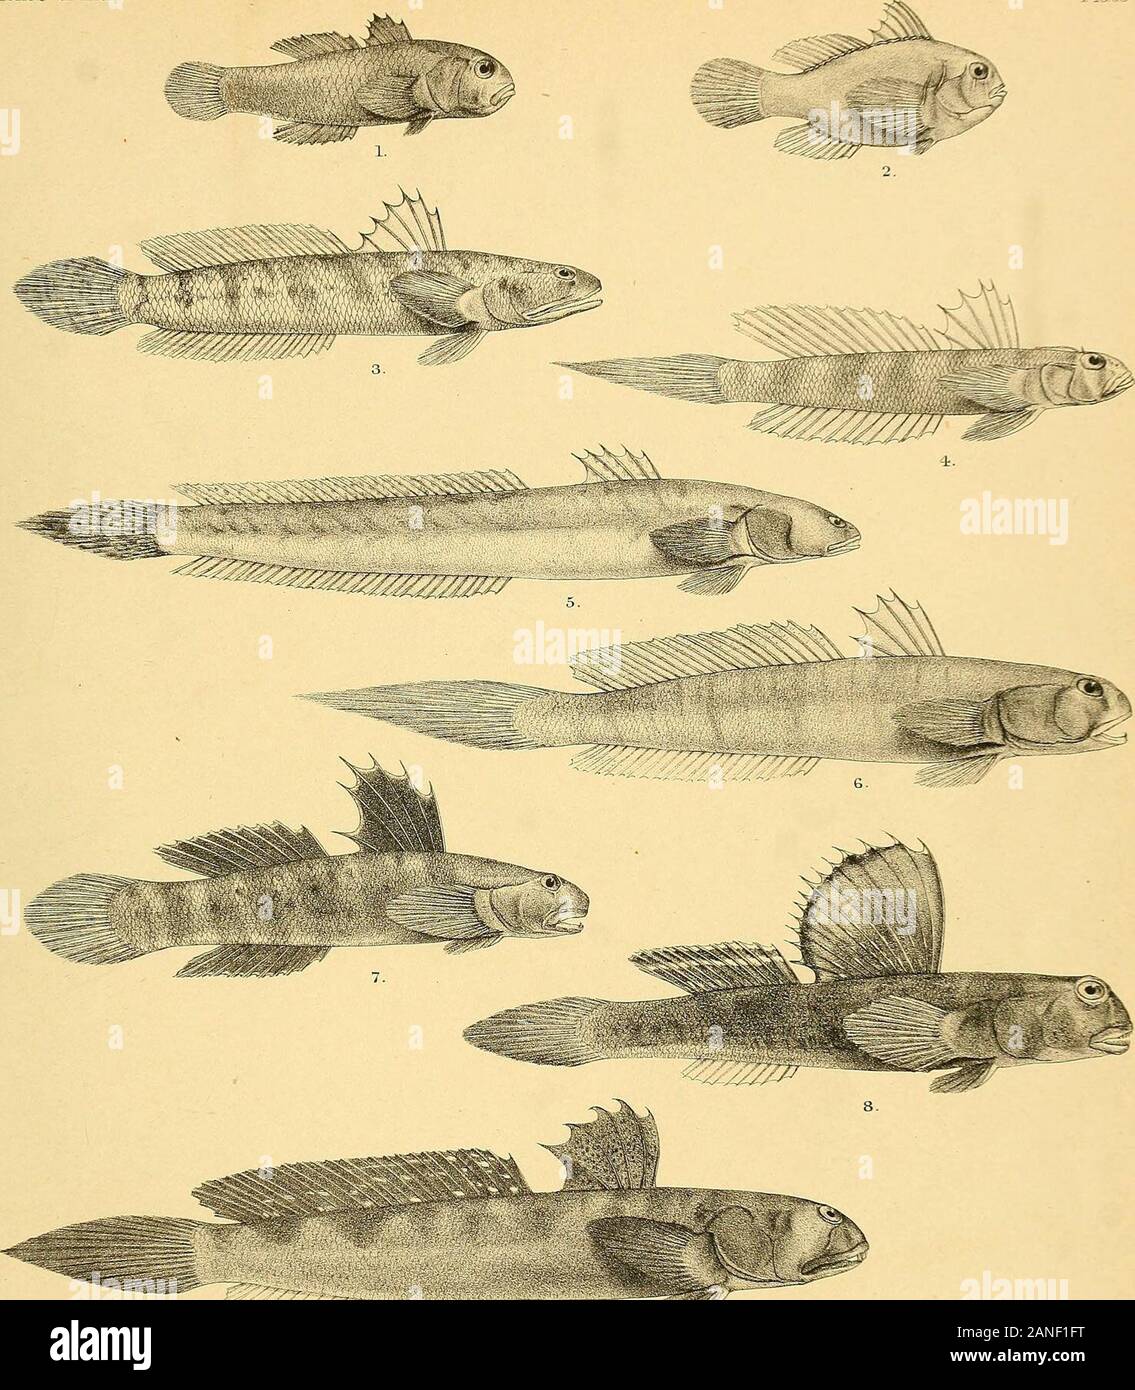 The fishes of India; being a natural history of the fishes known to inhabit the seas and fresh waters of India, Burma, and Ceylon . MttV»i-«T&gt; 3tcs 3HD . 1 G0B1US ORNATUS 2. G. MELANO STICTA 3.GGRISEUS. 4,G. VIRIDIPUNCTATUS (VAR.) 5, GBREVIWDSTRIS. eGPraSfflSrUS. 7.GALB0PUNCTATUS. 8.G.BIOCKLLATUS. 9.G.PLANIFR0NS 10. G. SADANUNDIO. Days Fish.es of India. late LXIV. ««^ ?;..,-., -iv^isJ&iPaEgfi&fcs Stock Photo